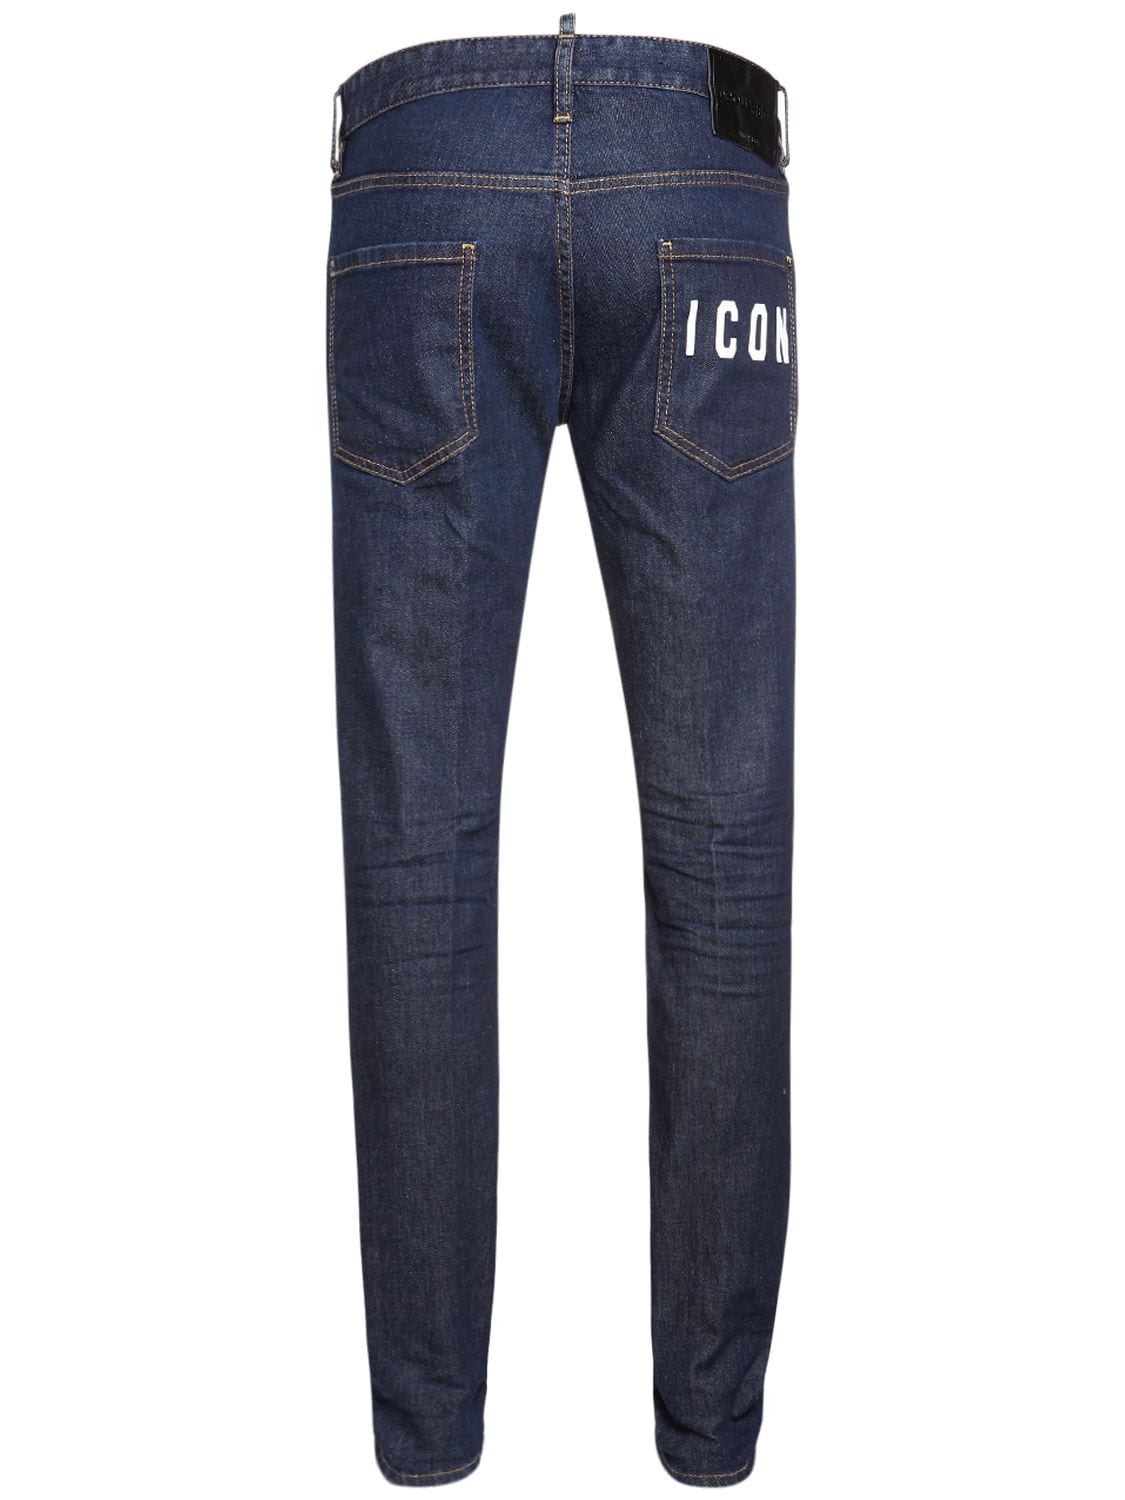 16.5cm Icon Print Cool Guy Denim Jeans